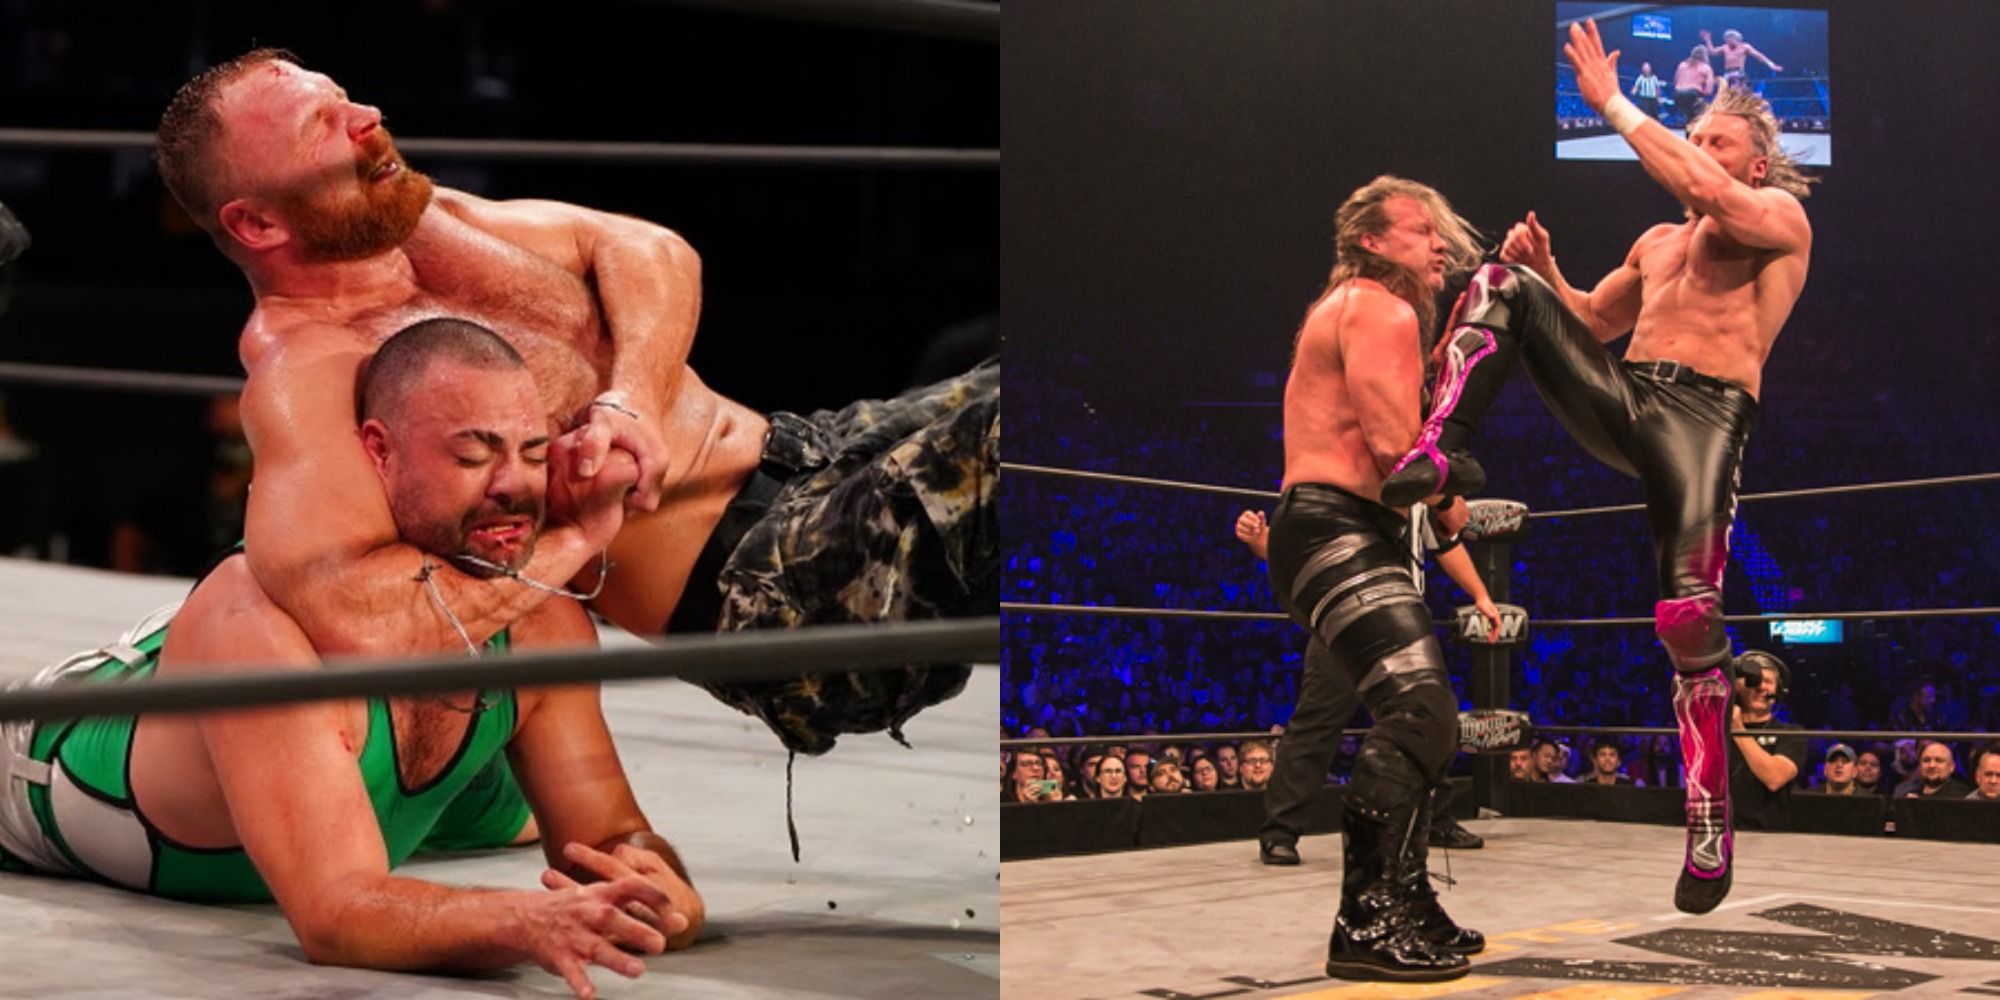 Split image of Jon Moxley choking Eddie Kingston and Kenny Omega kneeing Chris Jericho